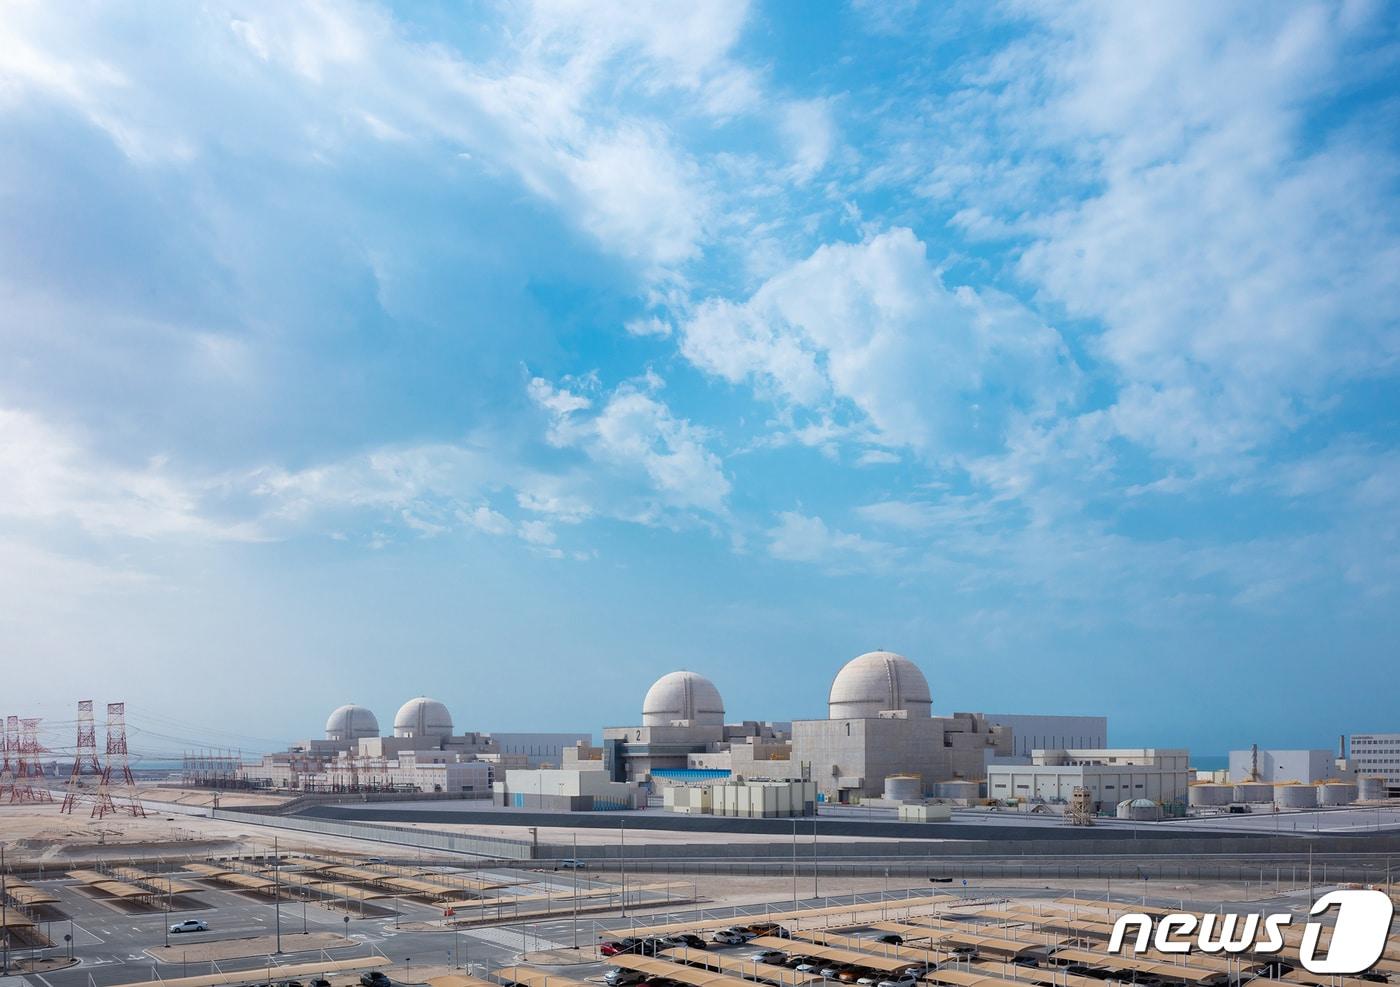 UAE원전사업의 주계약자인 한국전력&#40;대표이사 사장 정승일&#41;과 발주사인 UAE원자력공사&#40;ENEC&#41;가 27일 UAE 바라카 원전 2호기가 최초임계에 도달했다고 밝혔다.  &#40;한국전력 제공&#41; 2021.8.27/뉴스1 ⓒ News1 포토공용 기자